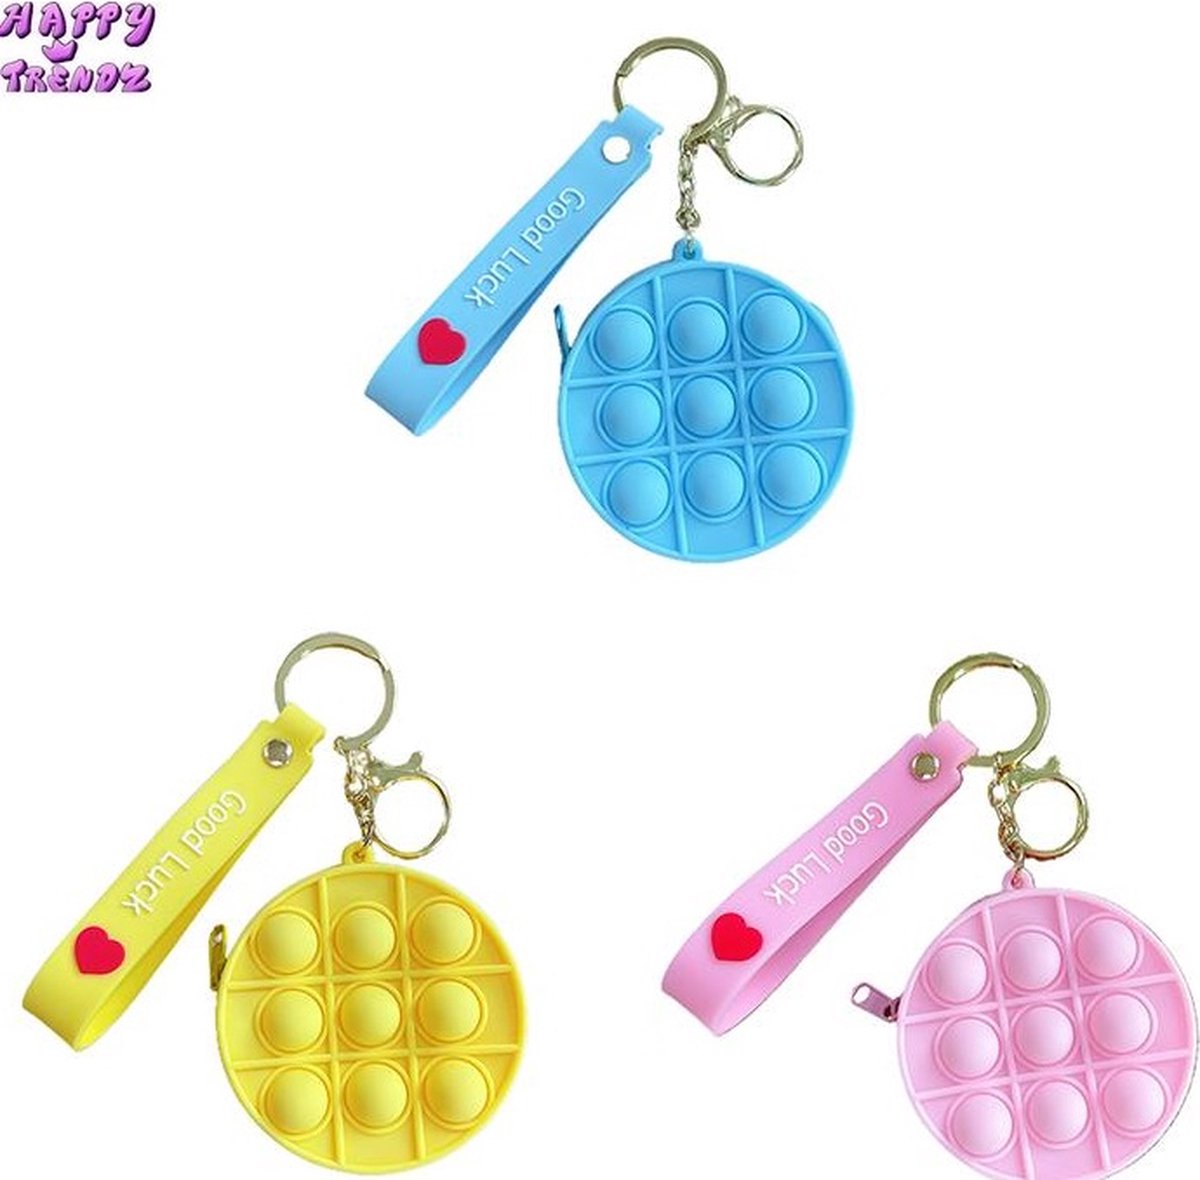 Happy Trendz® Pop it Sleutelhanger set van 3 - Tasje - Sleutelhanger - fidget toys - Keychain popit